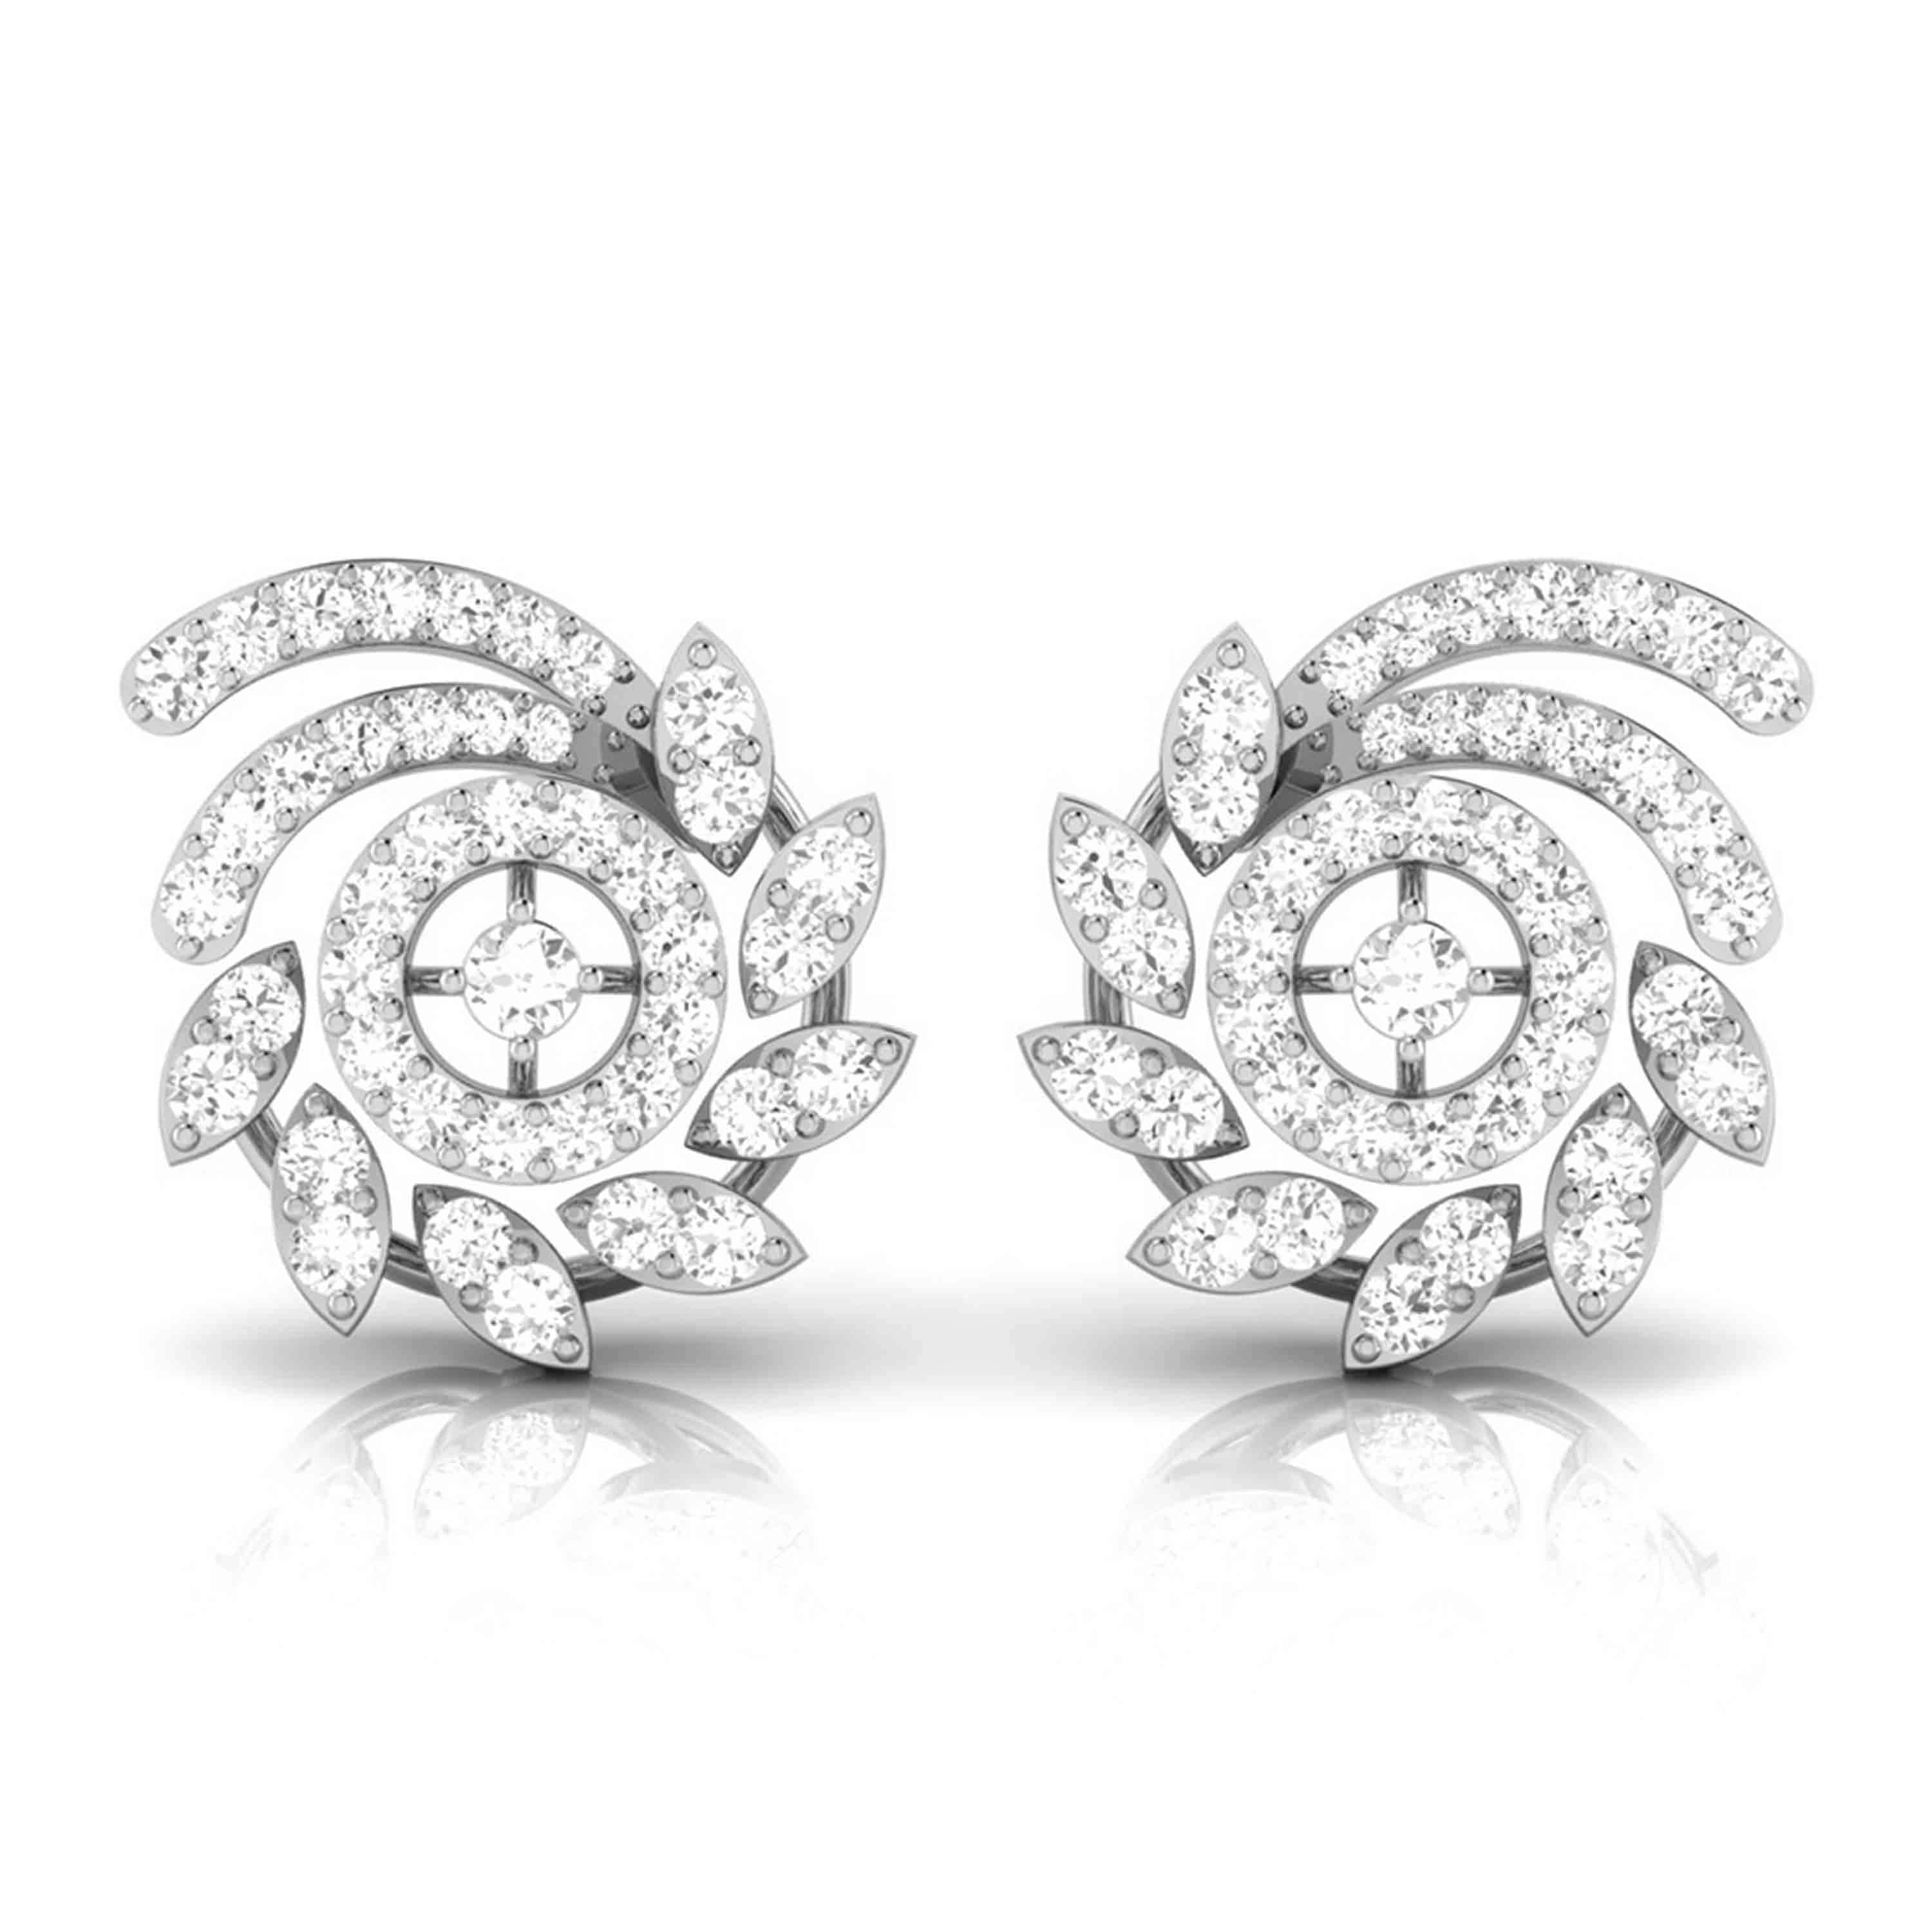 Solitaire earrings with 4.00 carat diamonds in platinum - BAUNAT